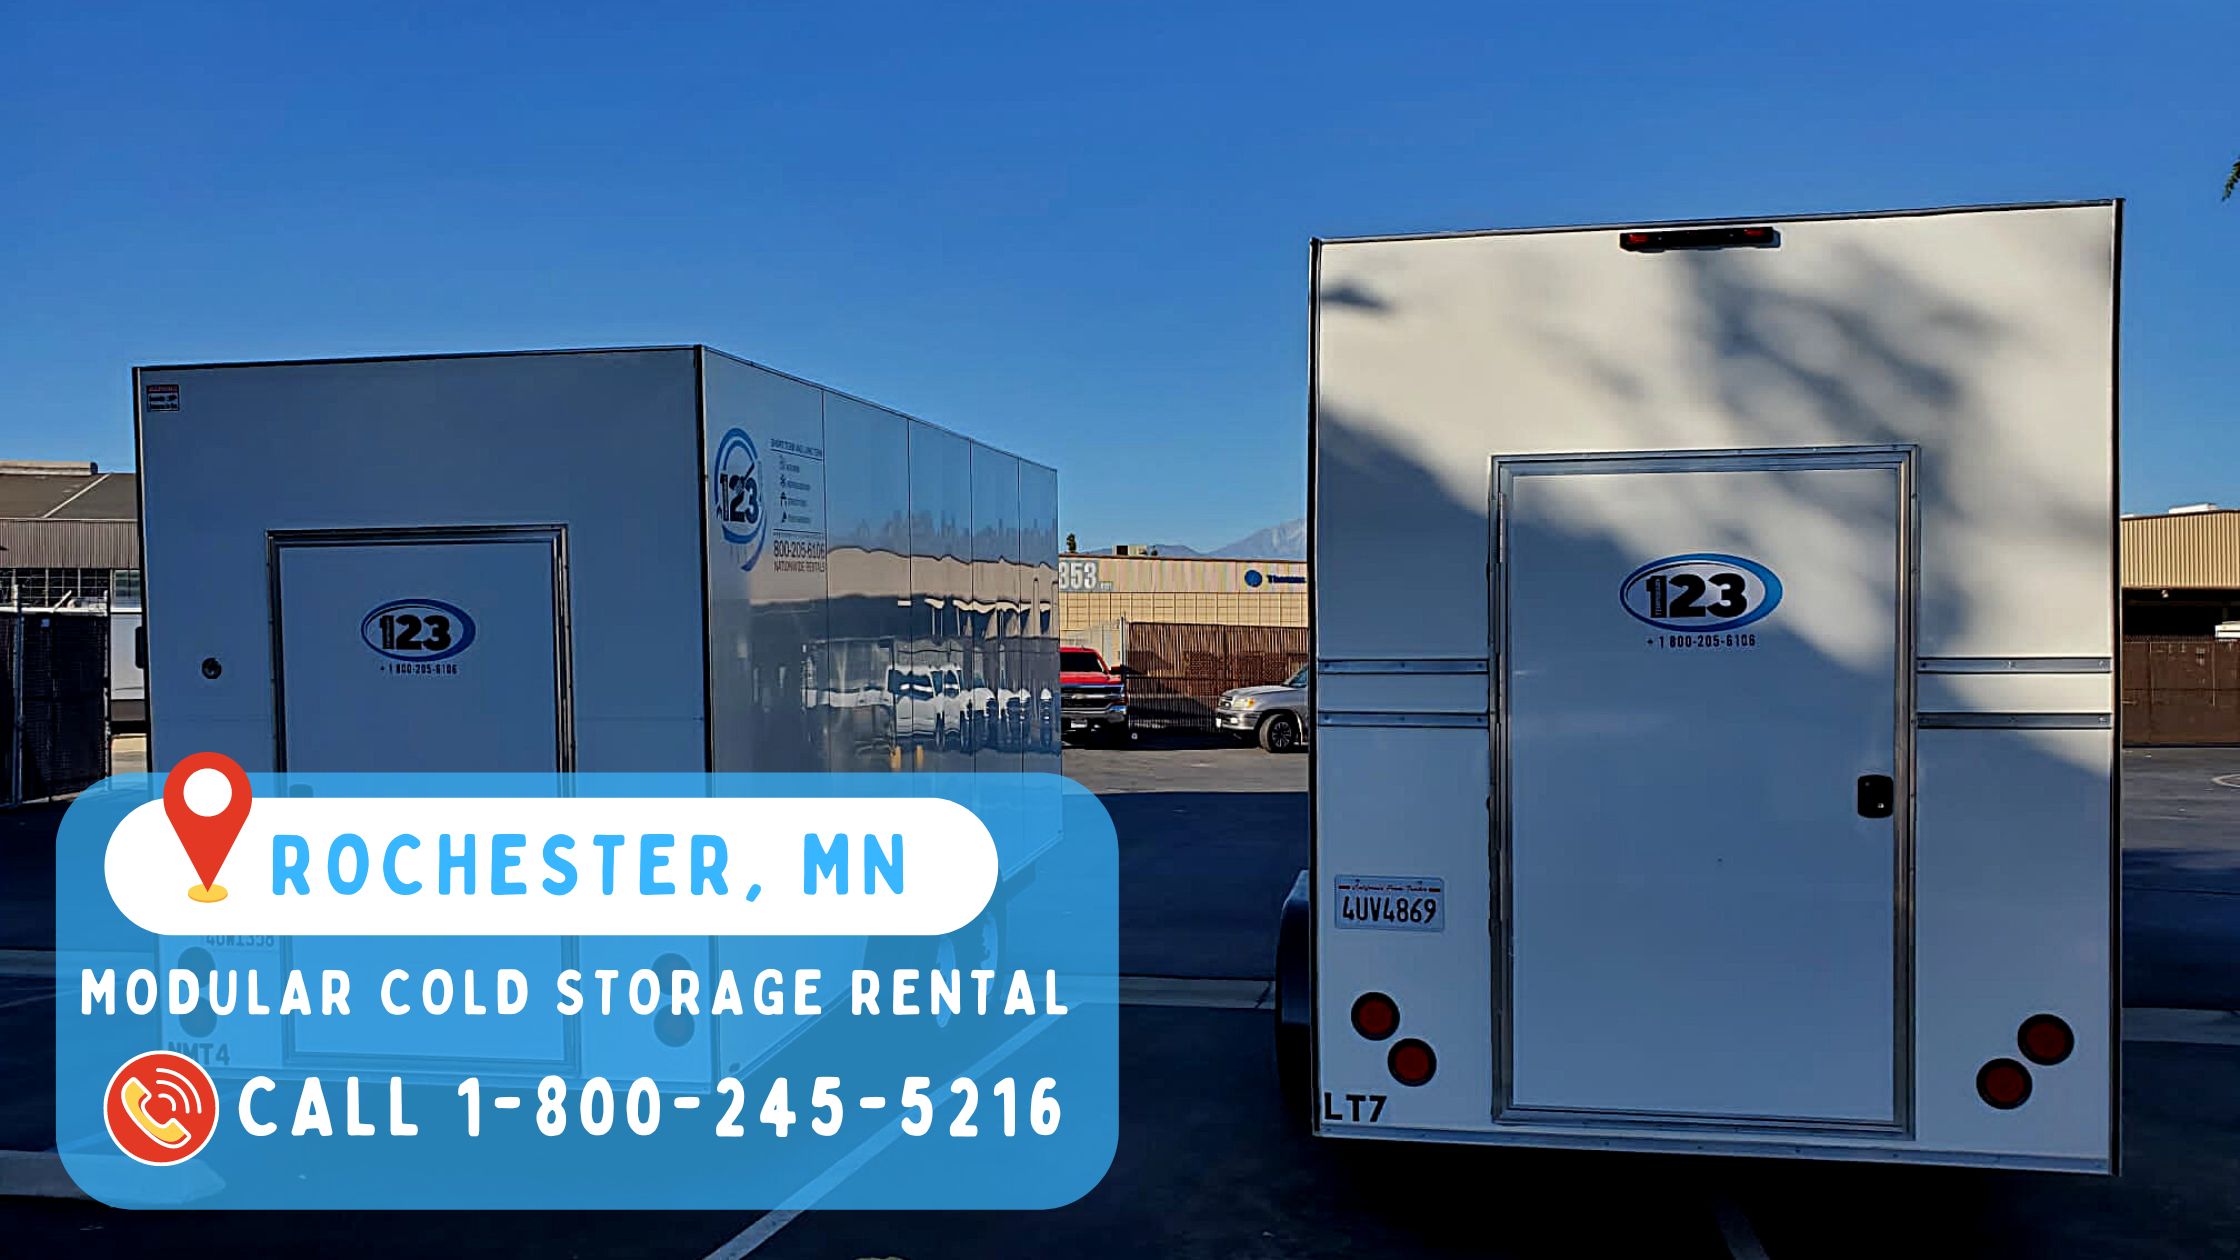 Modular cold storage rental in Rochester